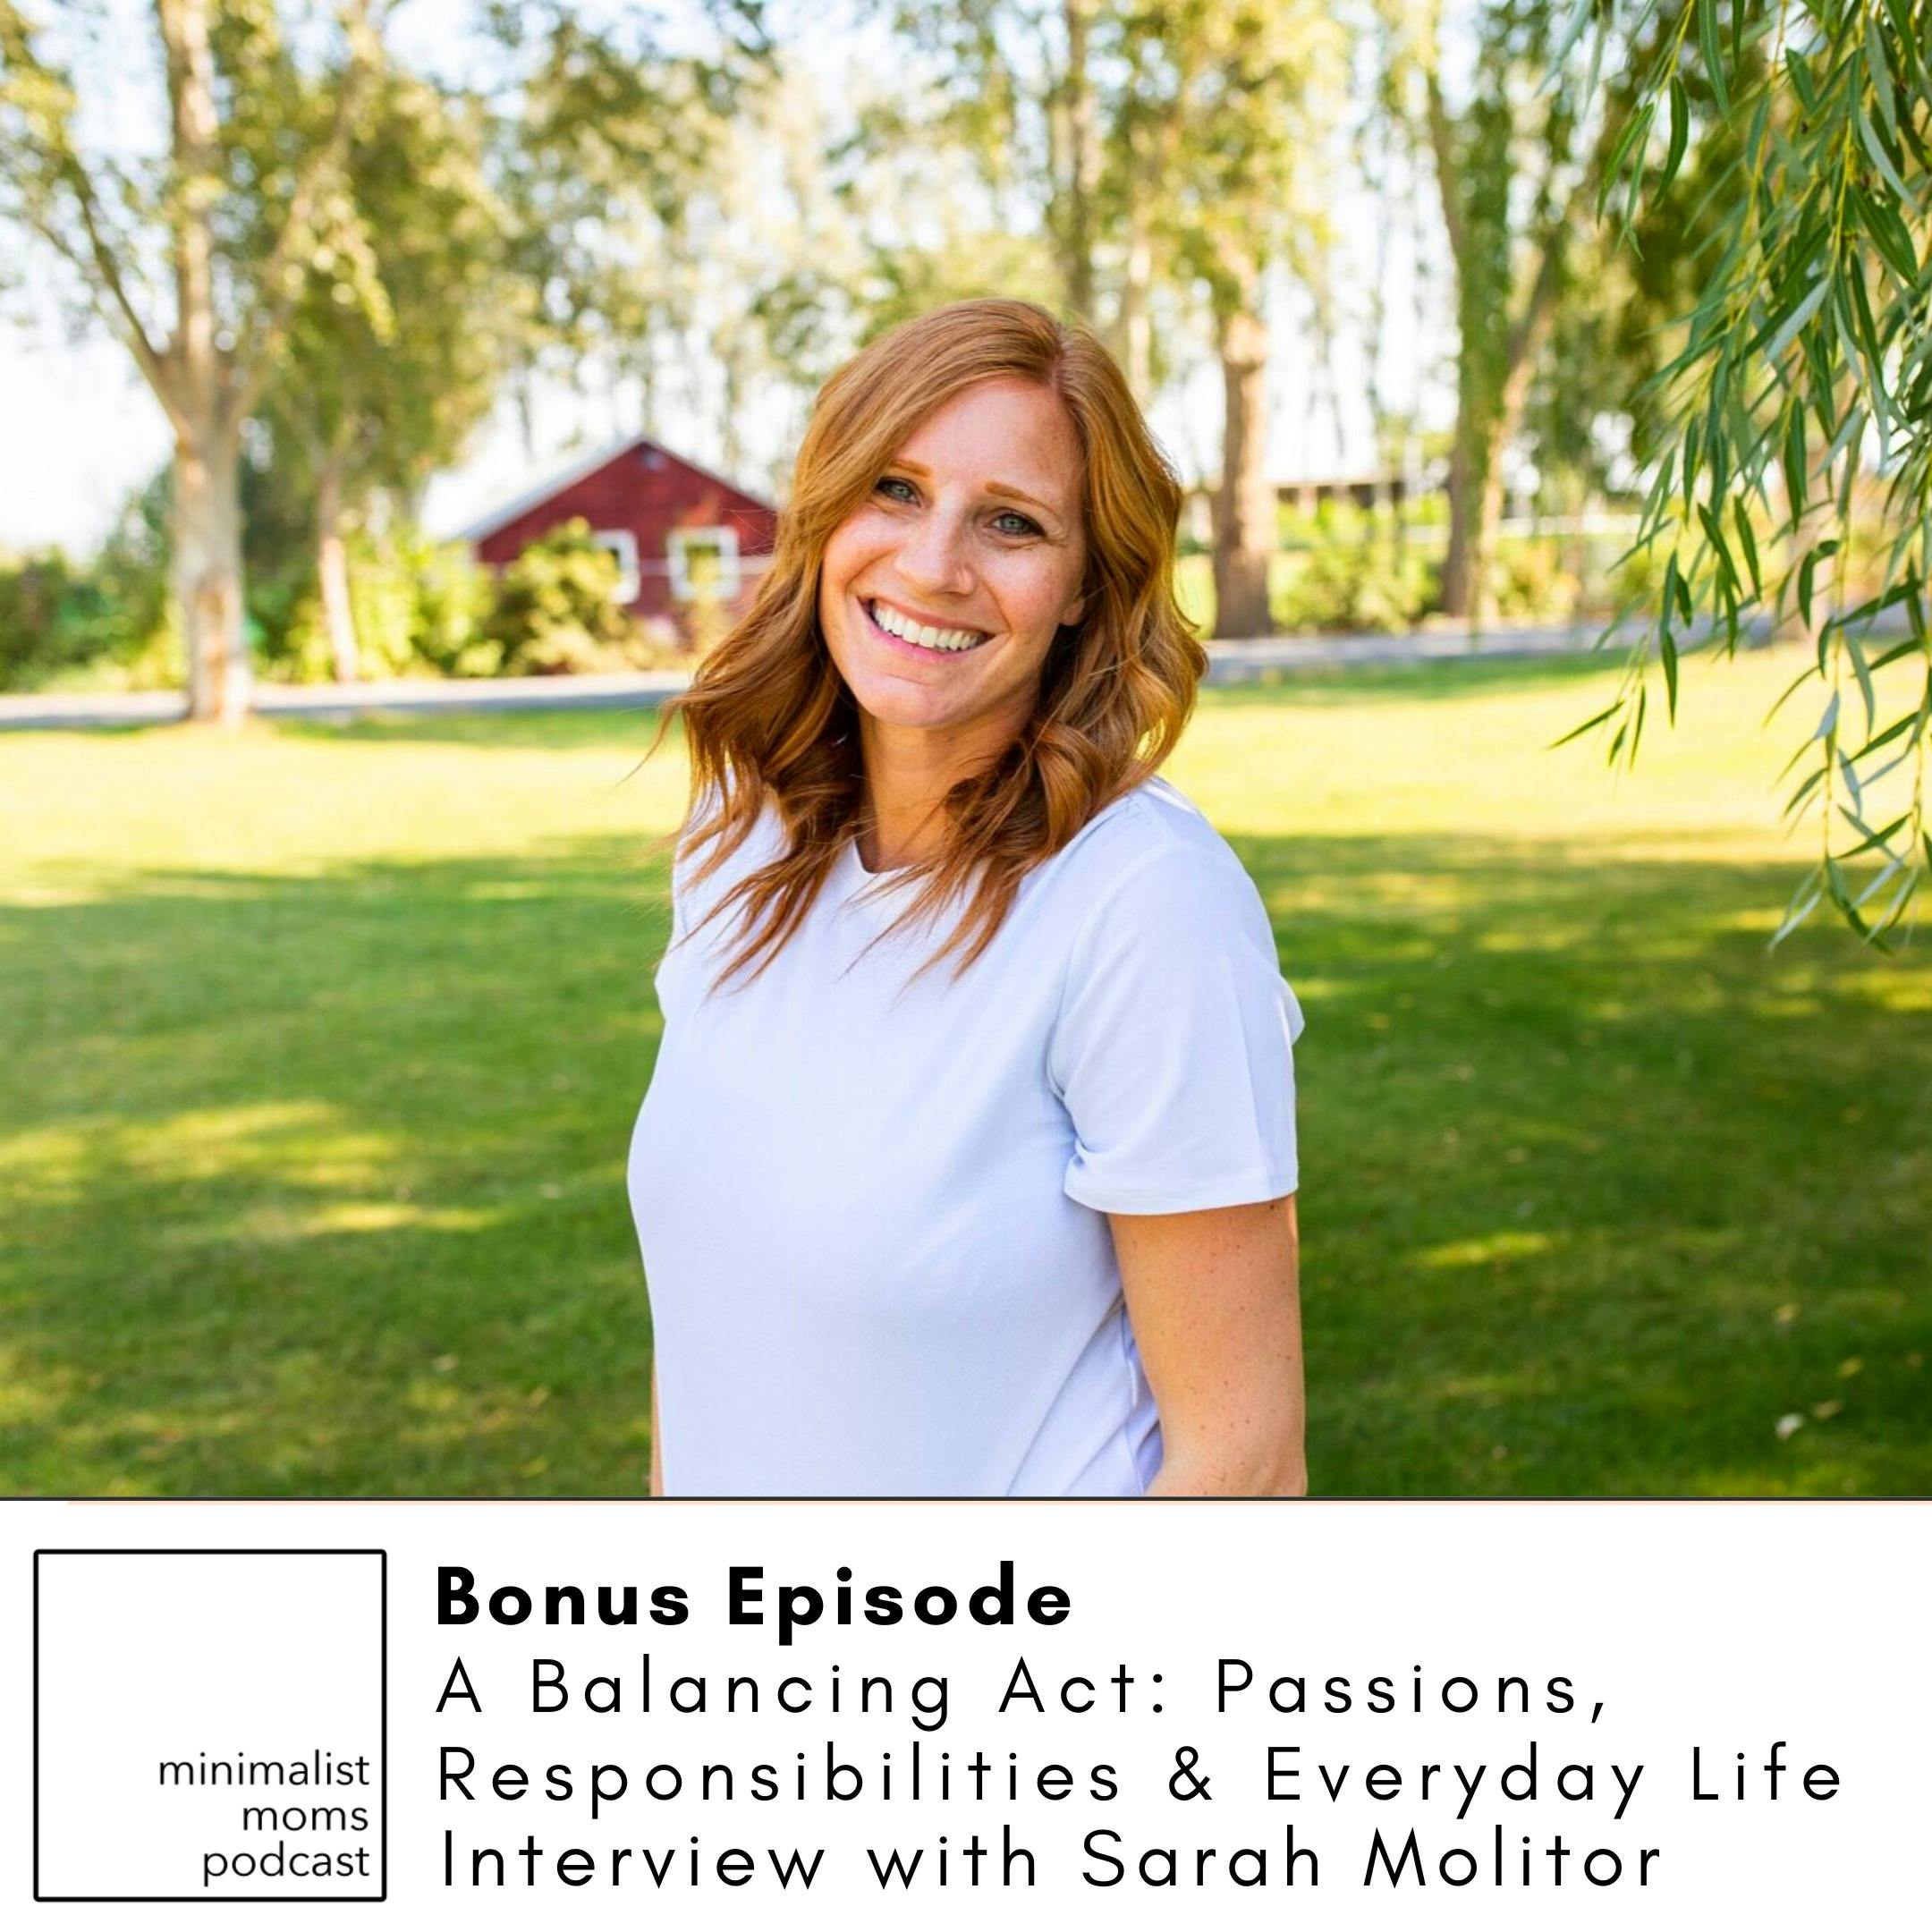 Bonus Episode: A Balancing Act: Passions, Responsibilities & Everyday Life with Sarah Molitor